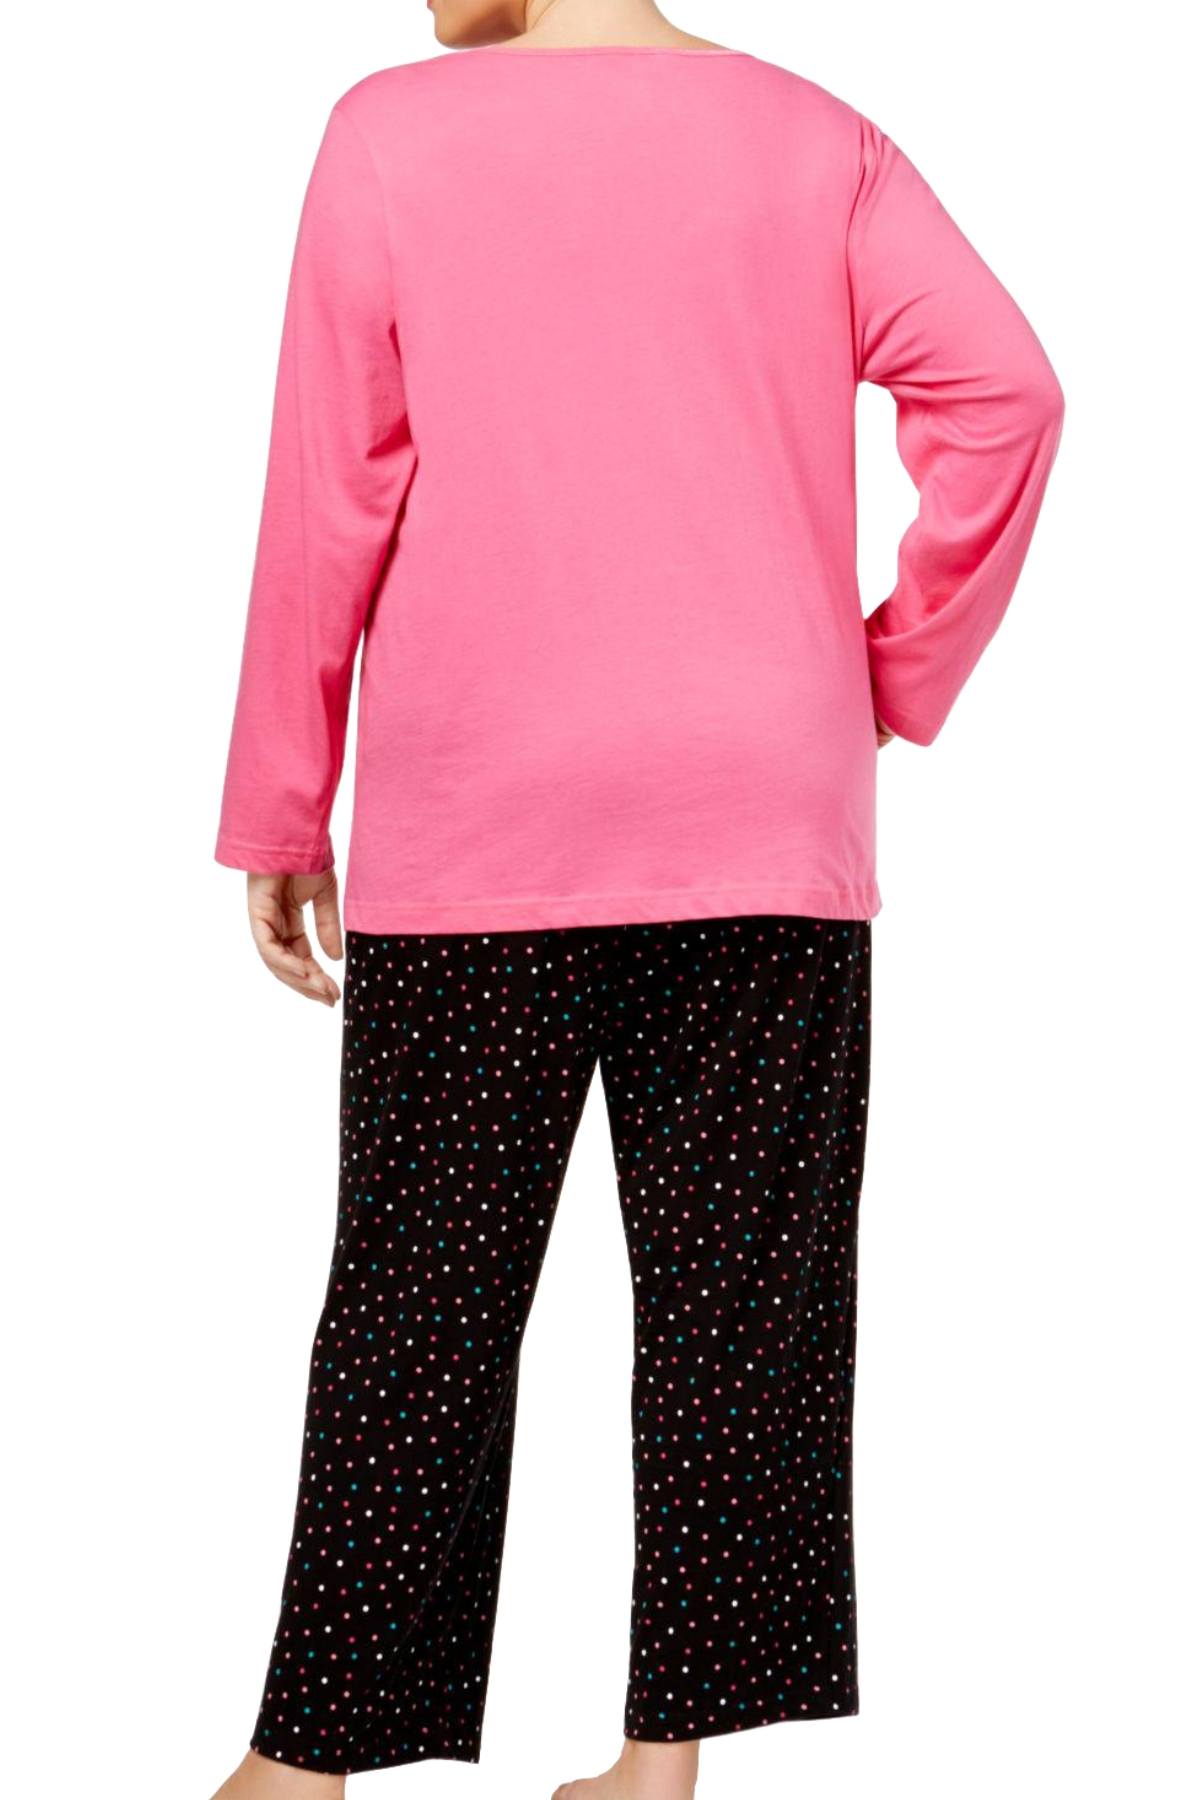 Charter Club Intimates Pink/Black Multi-Dots Top & Printed Pant Pajama Set